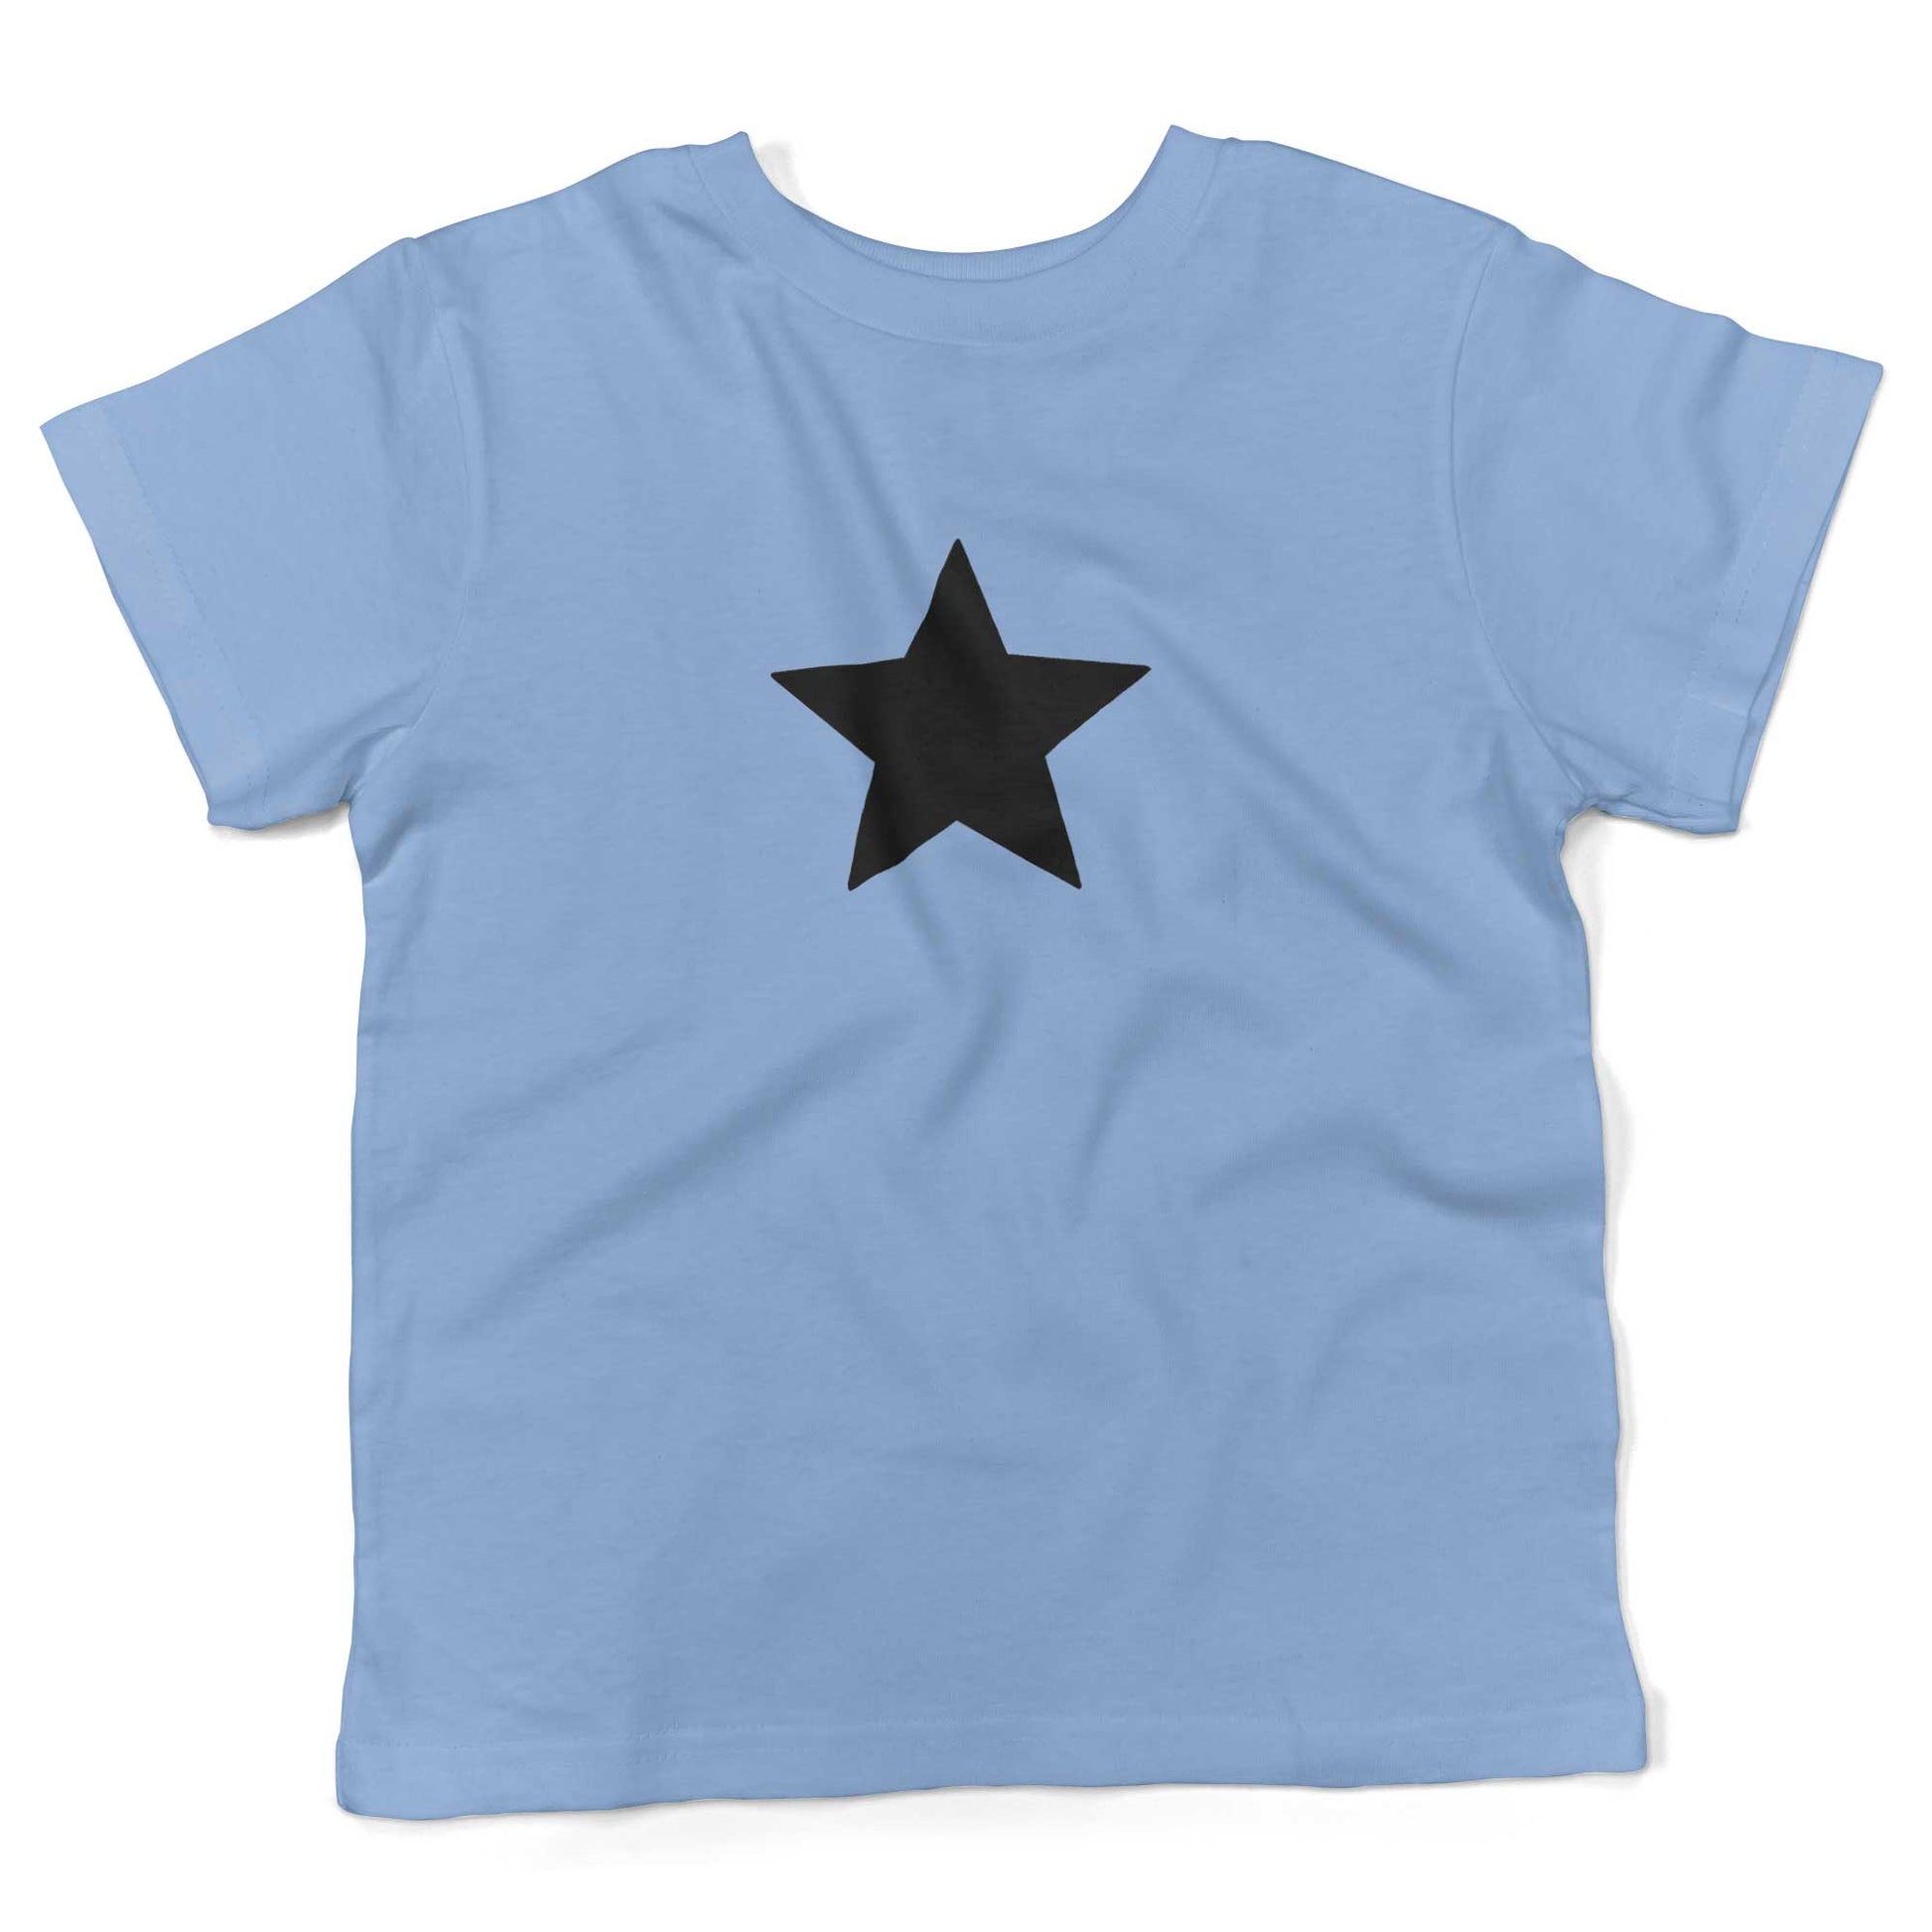 Five-Point Star Toddler Shirt-Organic Baby Blue-Black Star